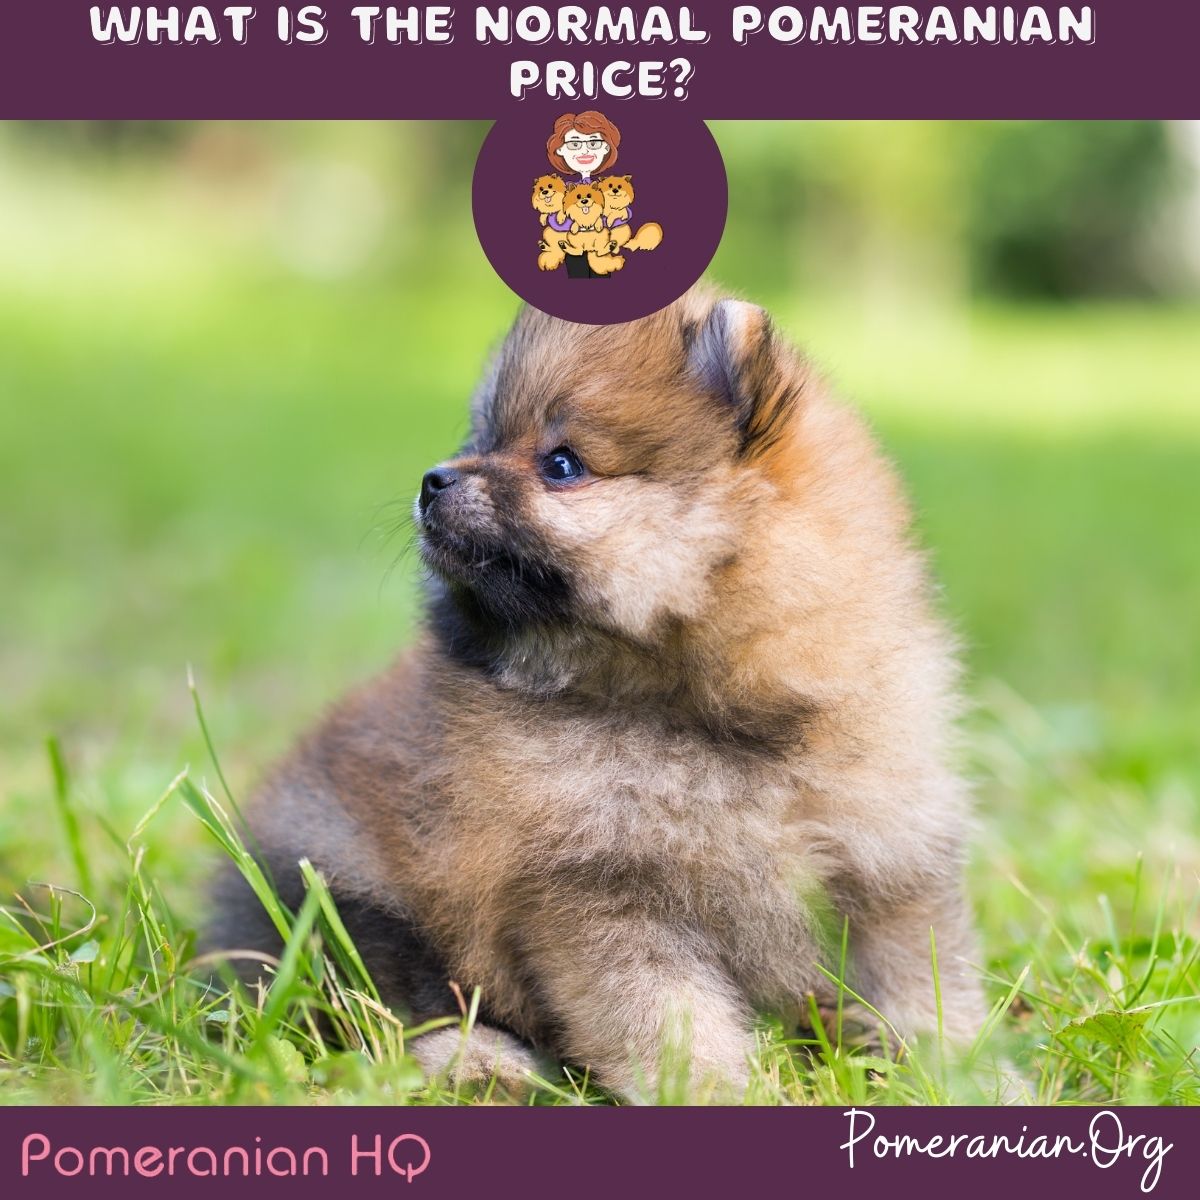 Pomeranian puppies cost